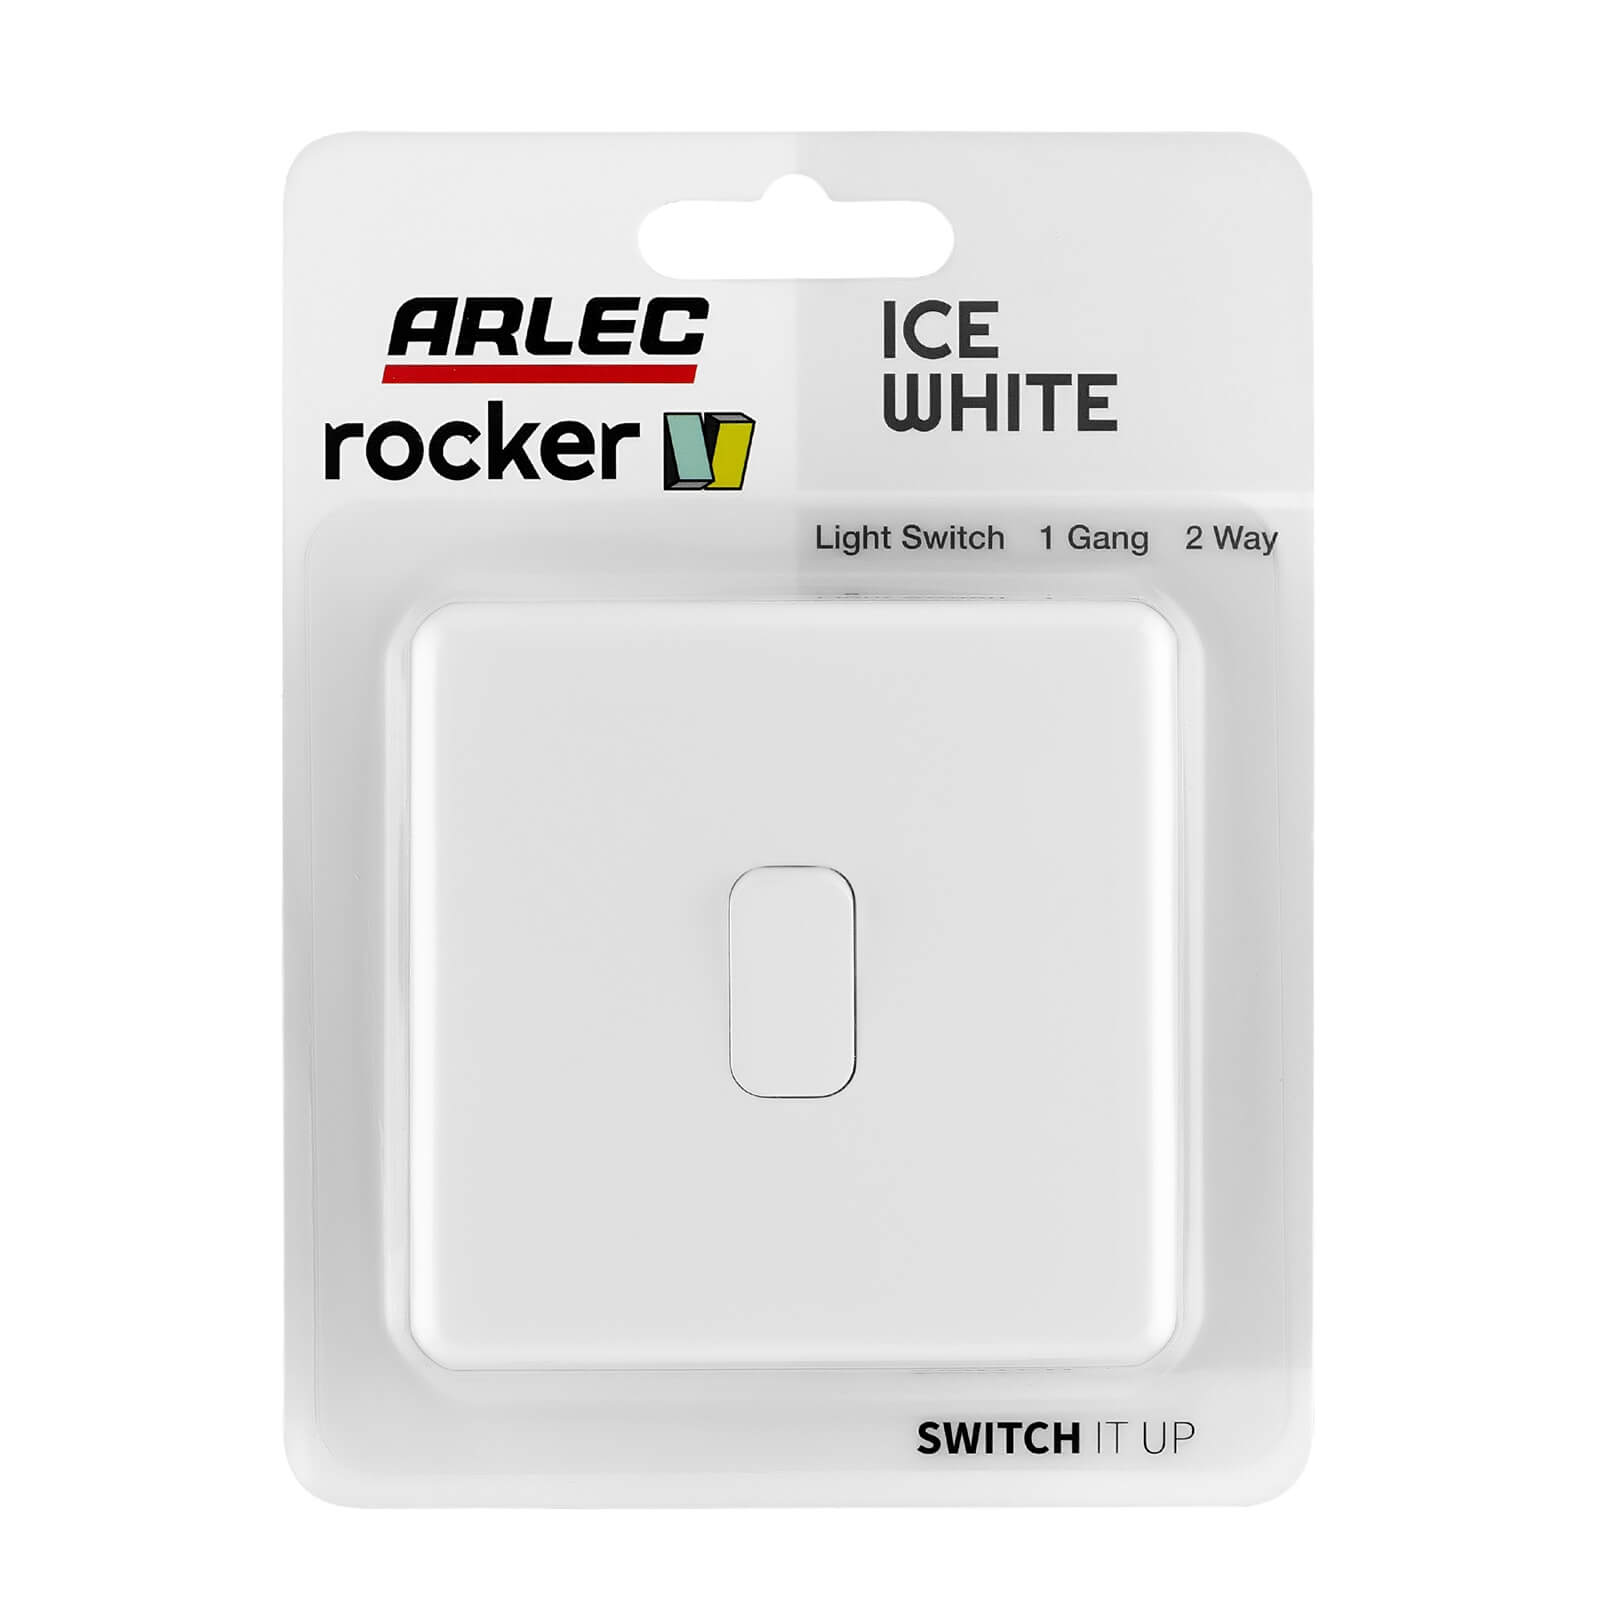 Arlec Rocker 10A 1Gang 2Way Ice White Single light Switch